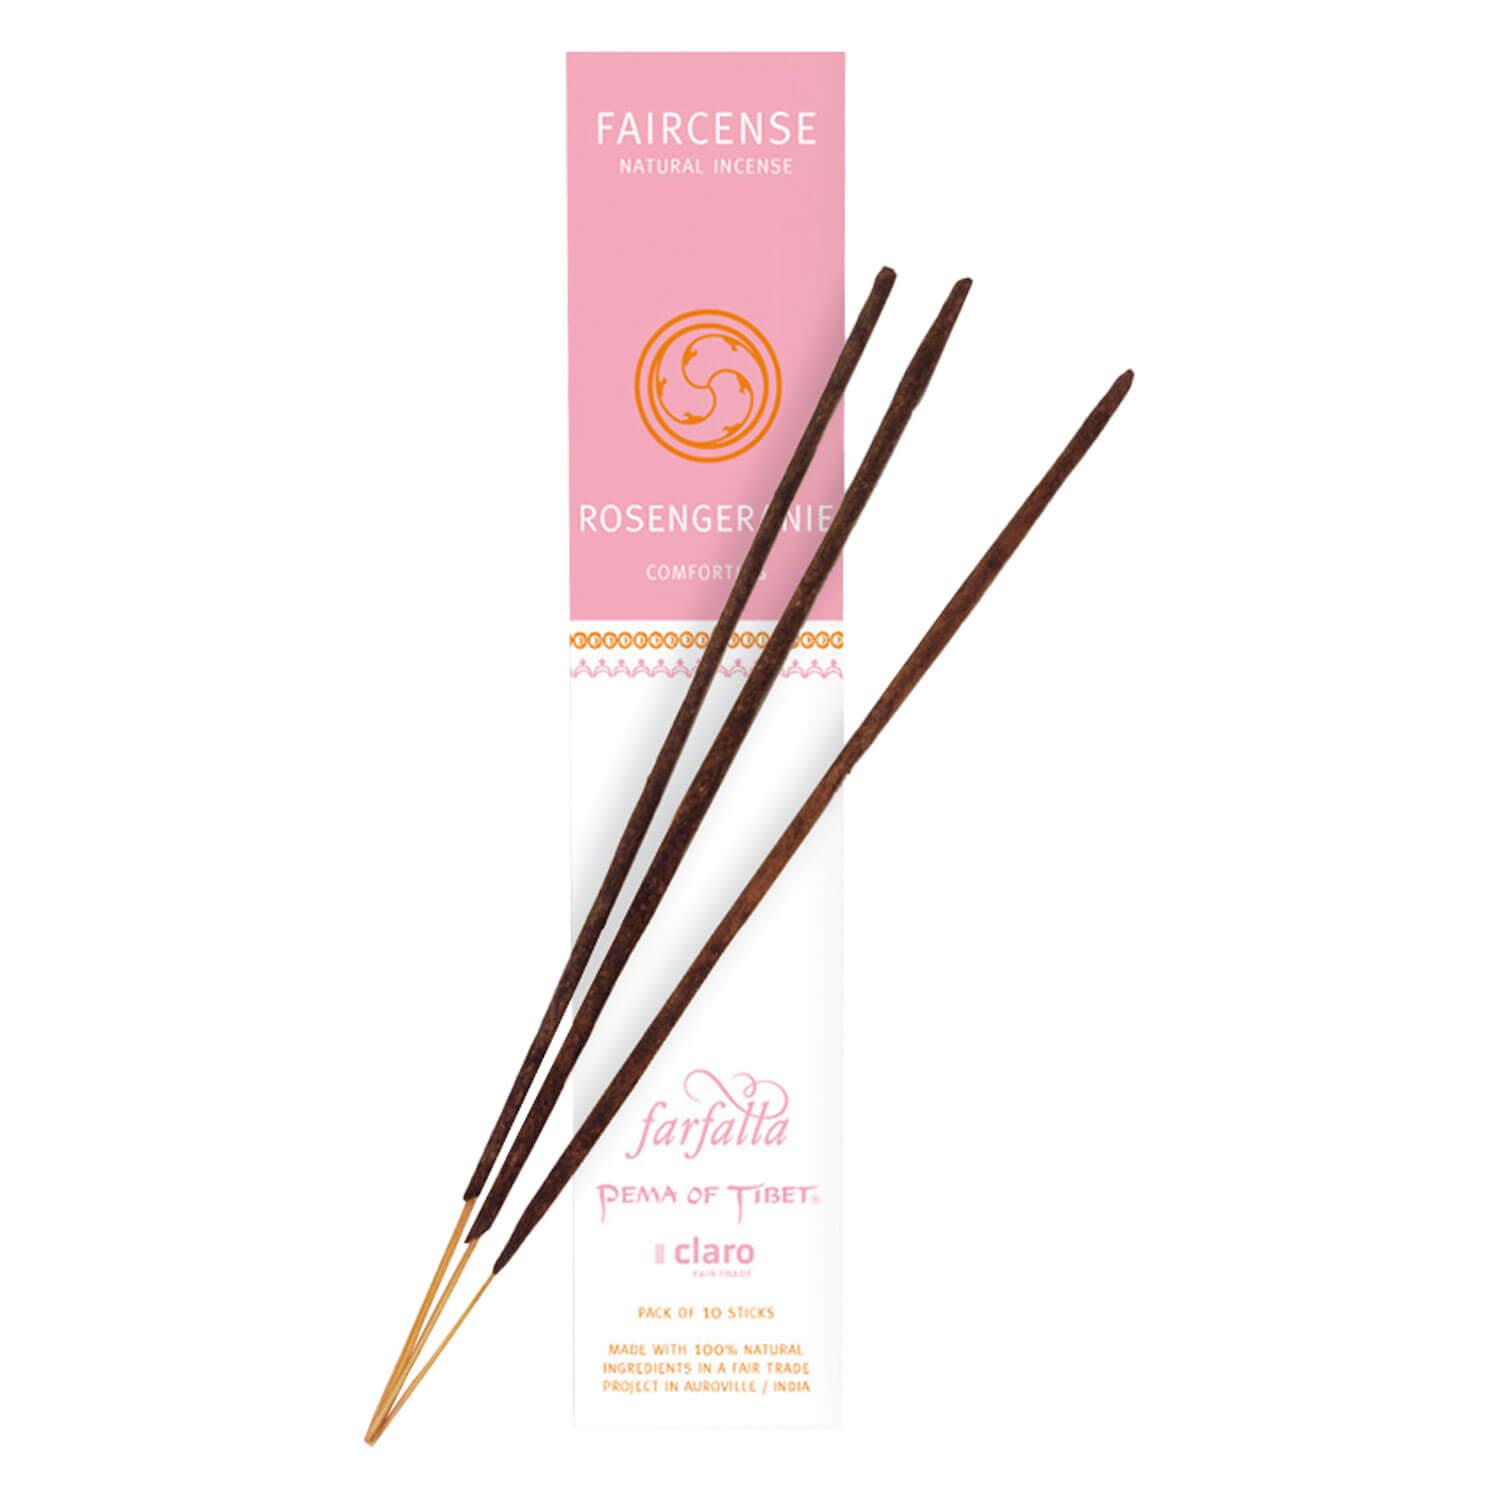 Farfalla Räucherstäbchen - Rose Geranium/Comforting - Faircense Incense Sticks